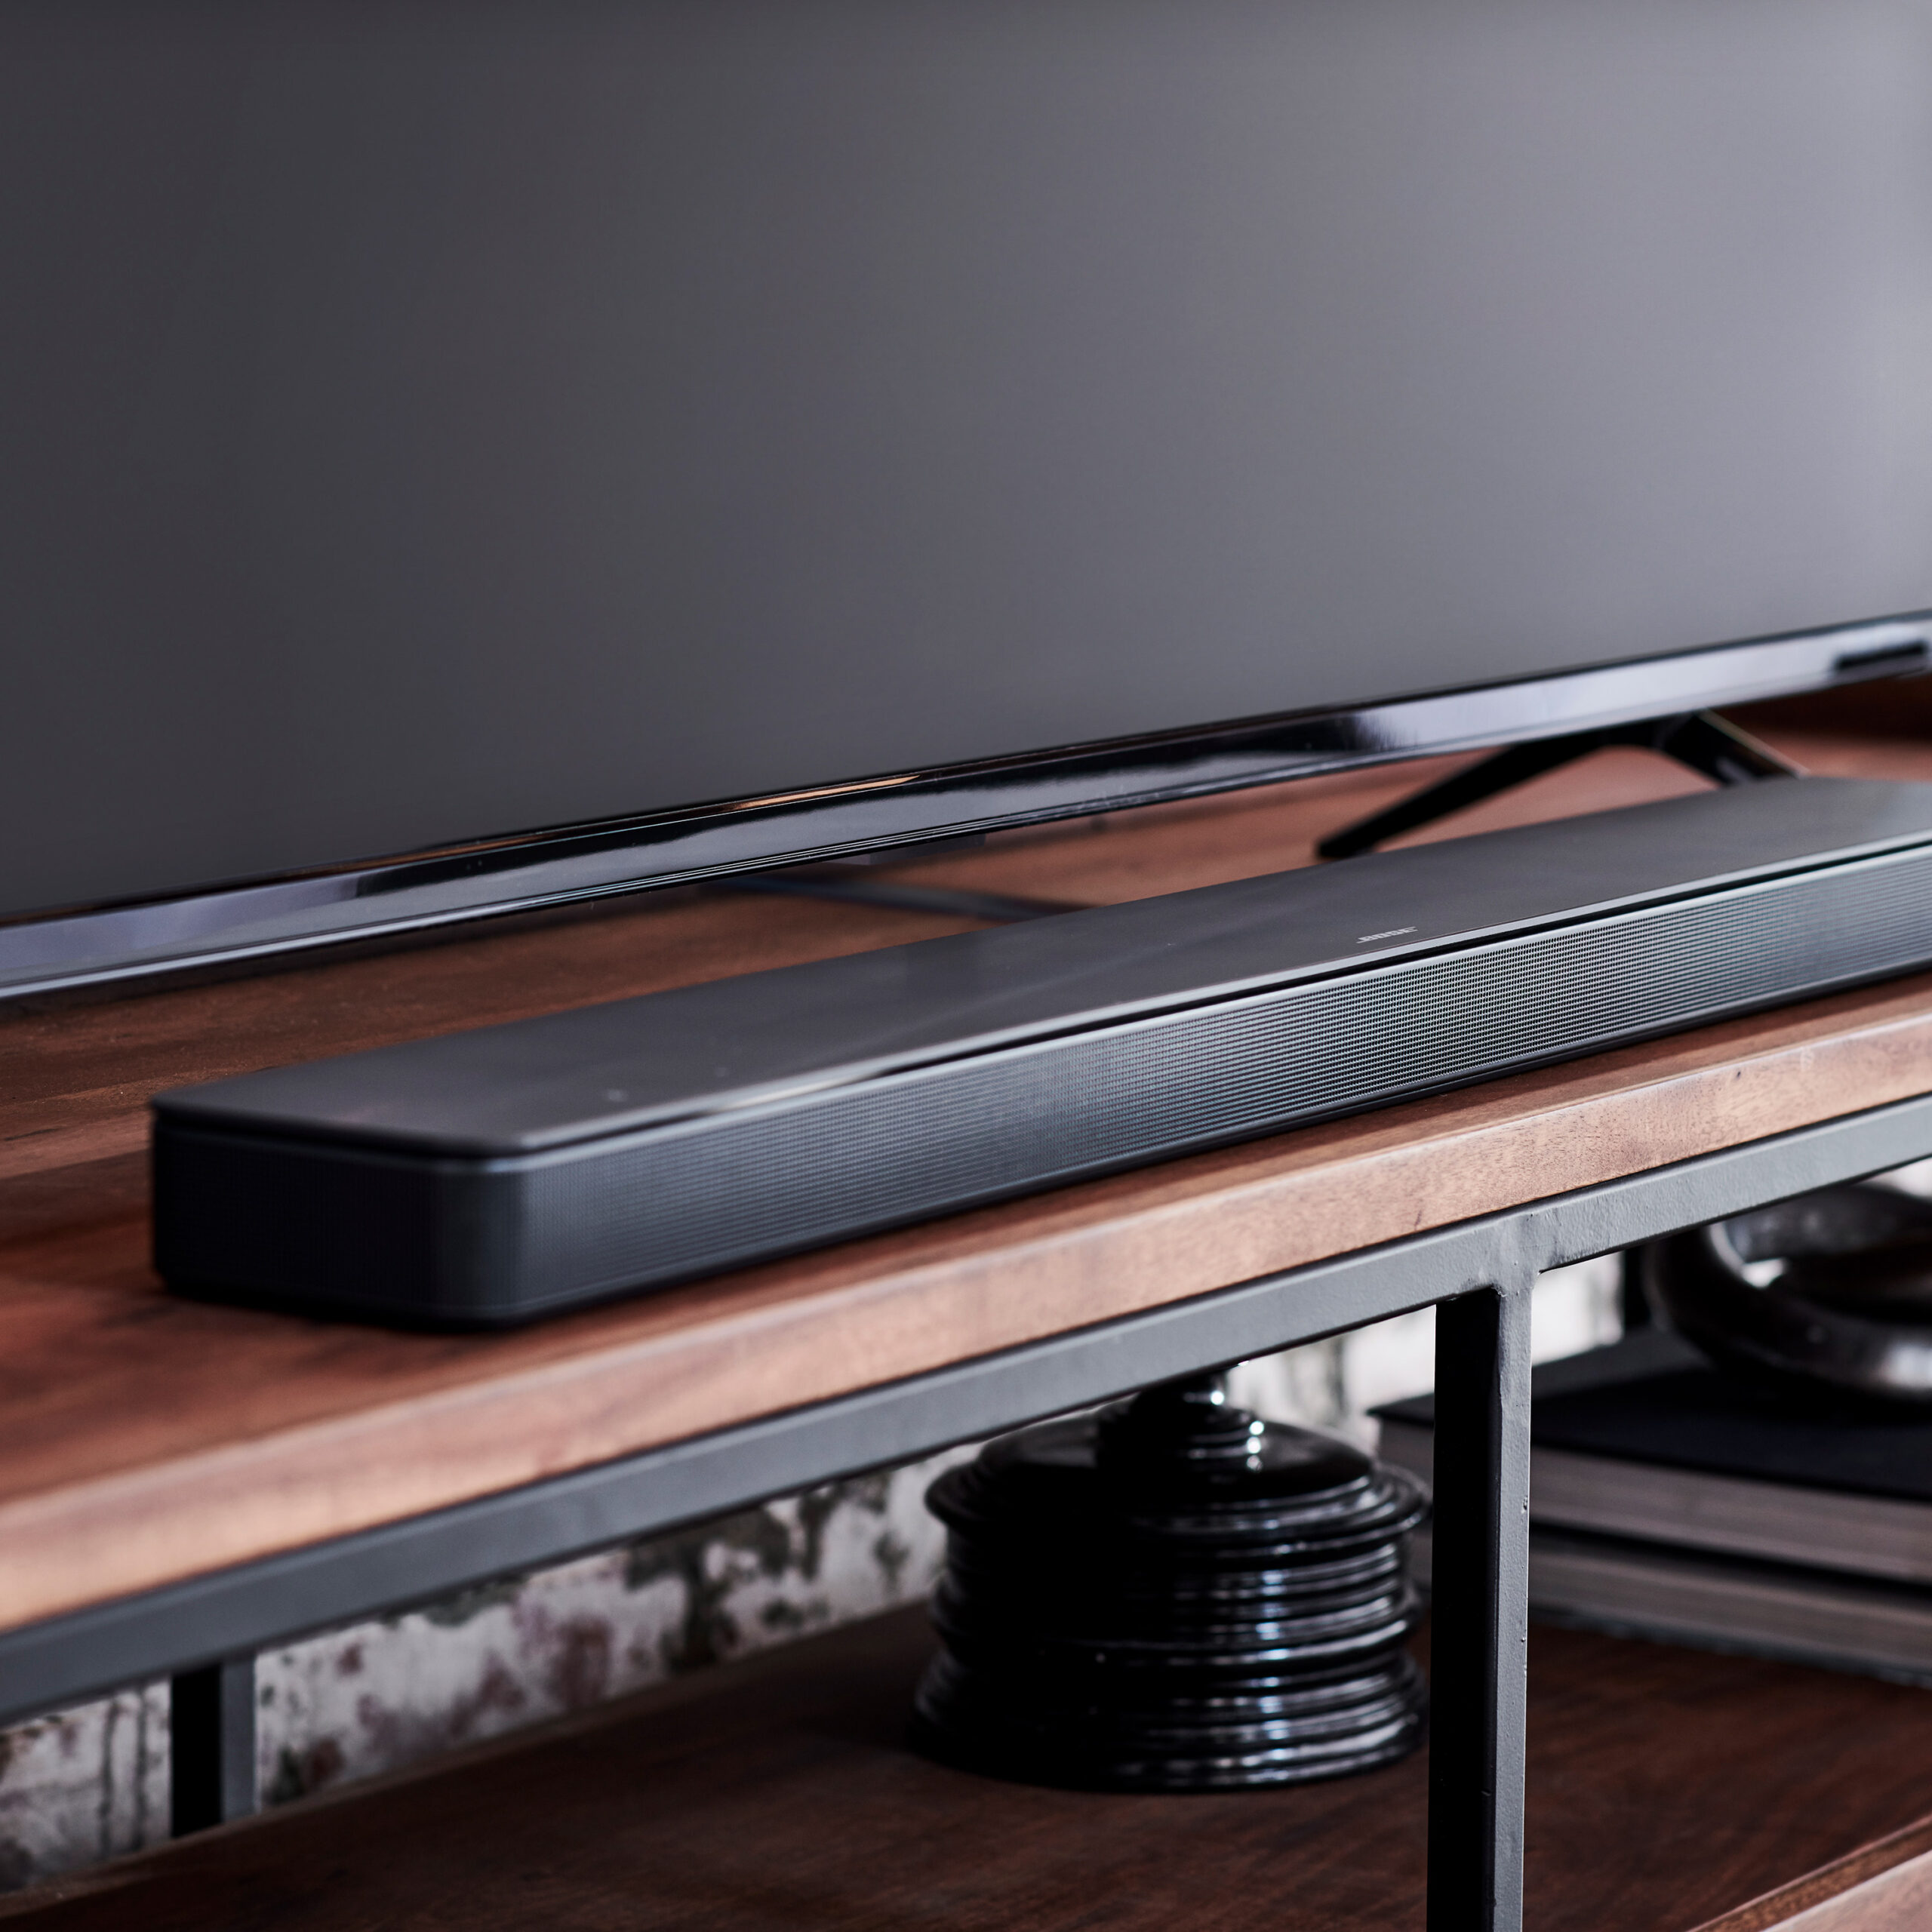 Bose smart speaker soundbars: Product image of the Bose Souundbar 500 from Bose press release. The soundbar sits ona wood TV stand with a TV above it.